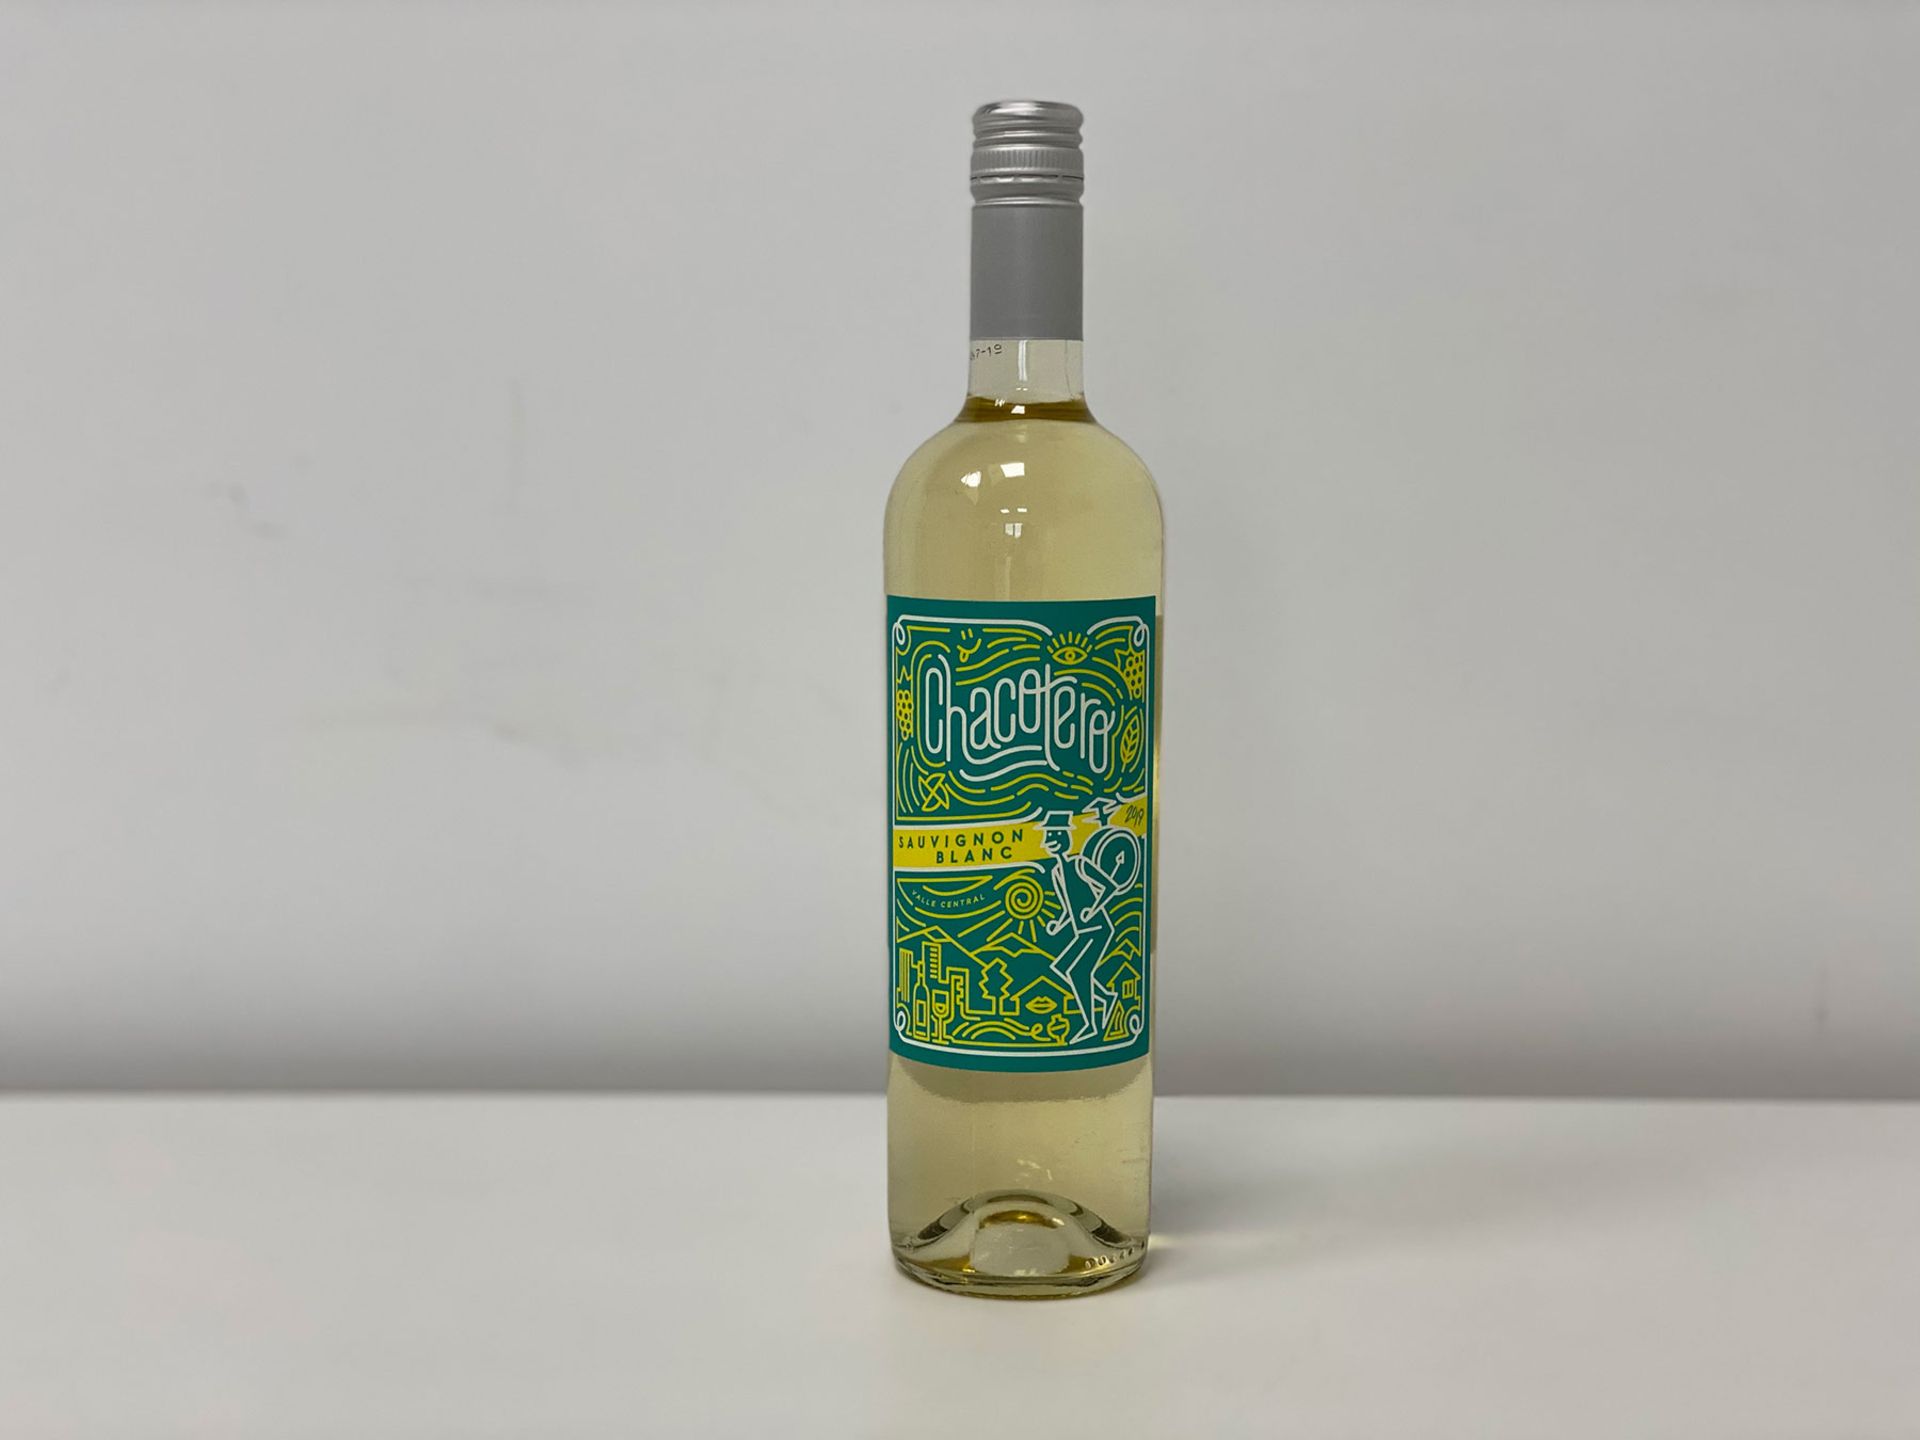 60 Bottles (10 Cases) Punti Ferrer - Chacotero Sauvignon Blanc - Central Valley